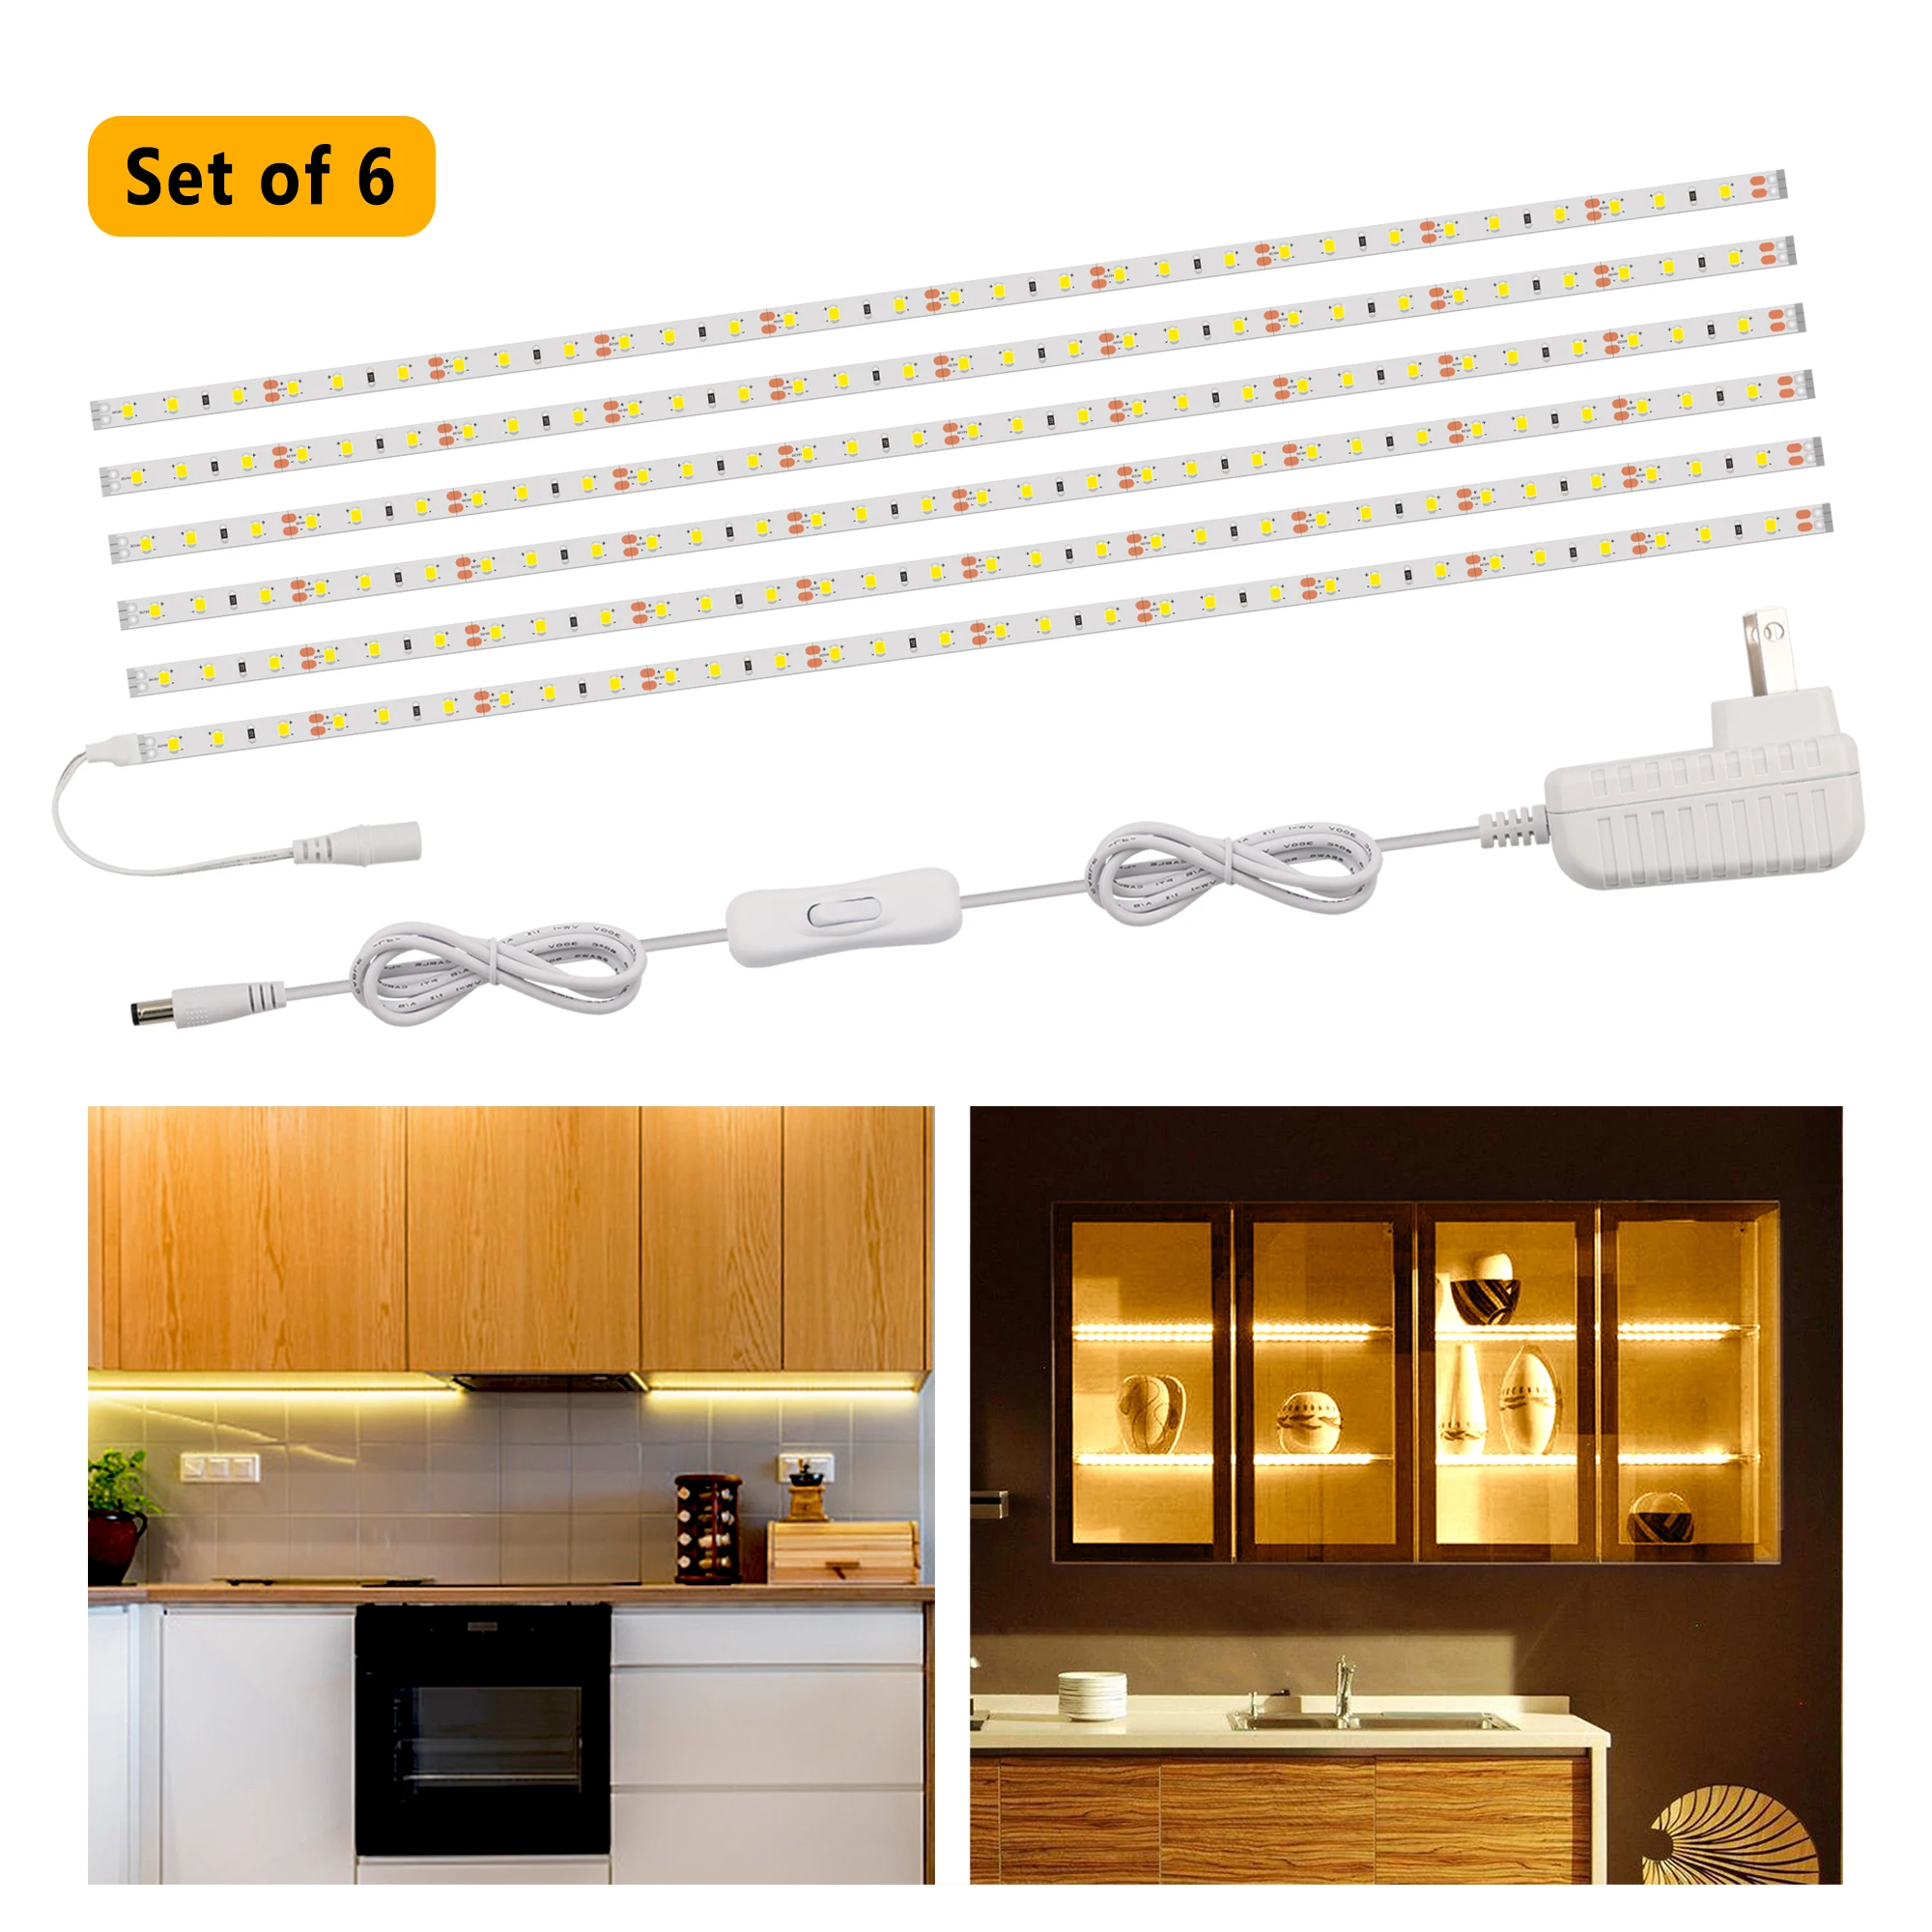 9.8 Feet LED Strip Lights Tape Under Cabinet Kitchen Shelf Counter Lighting Kit